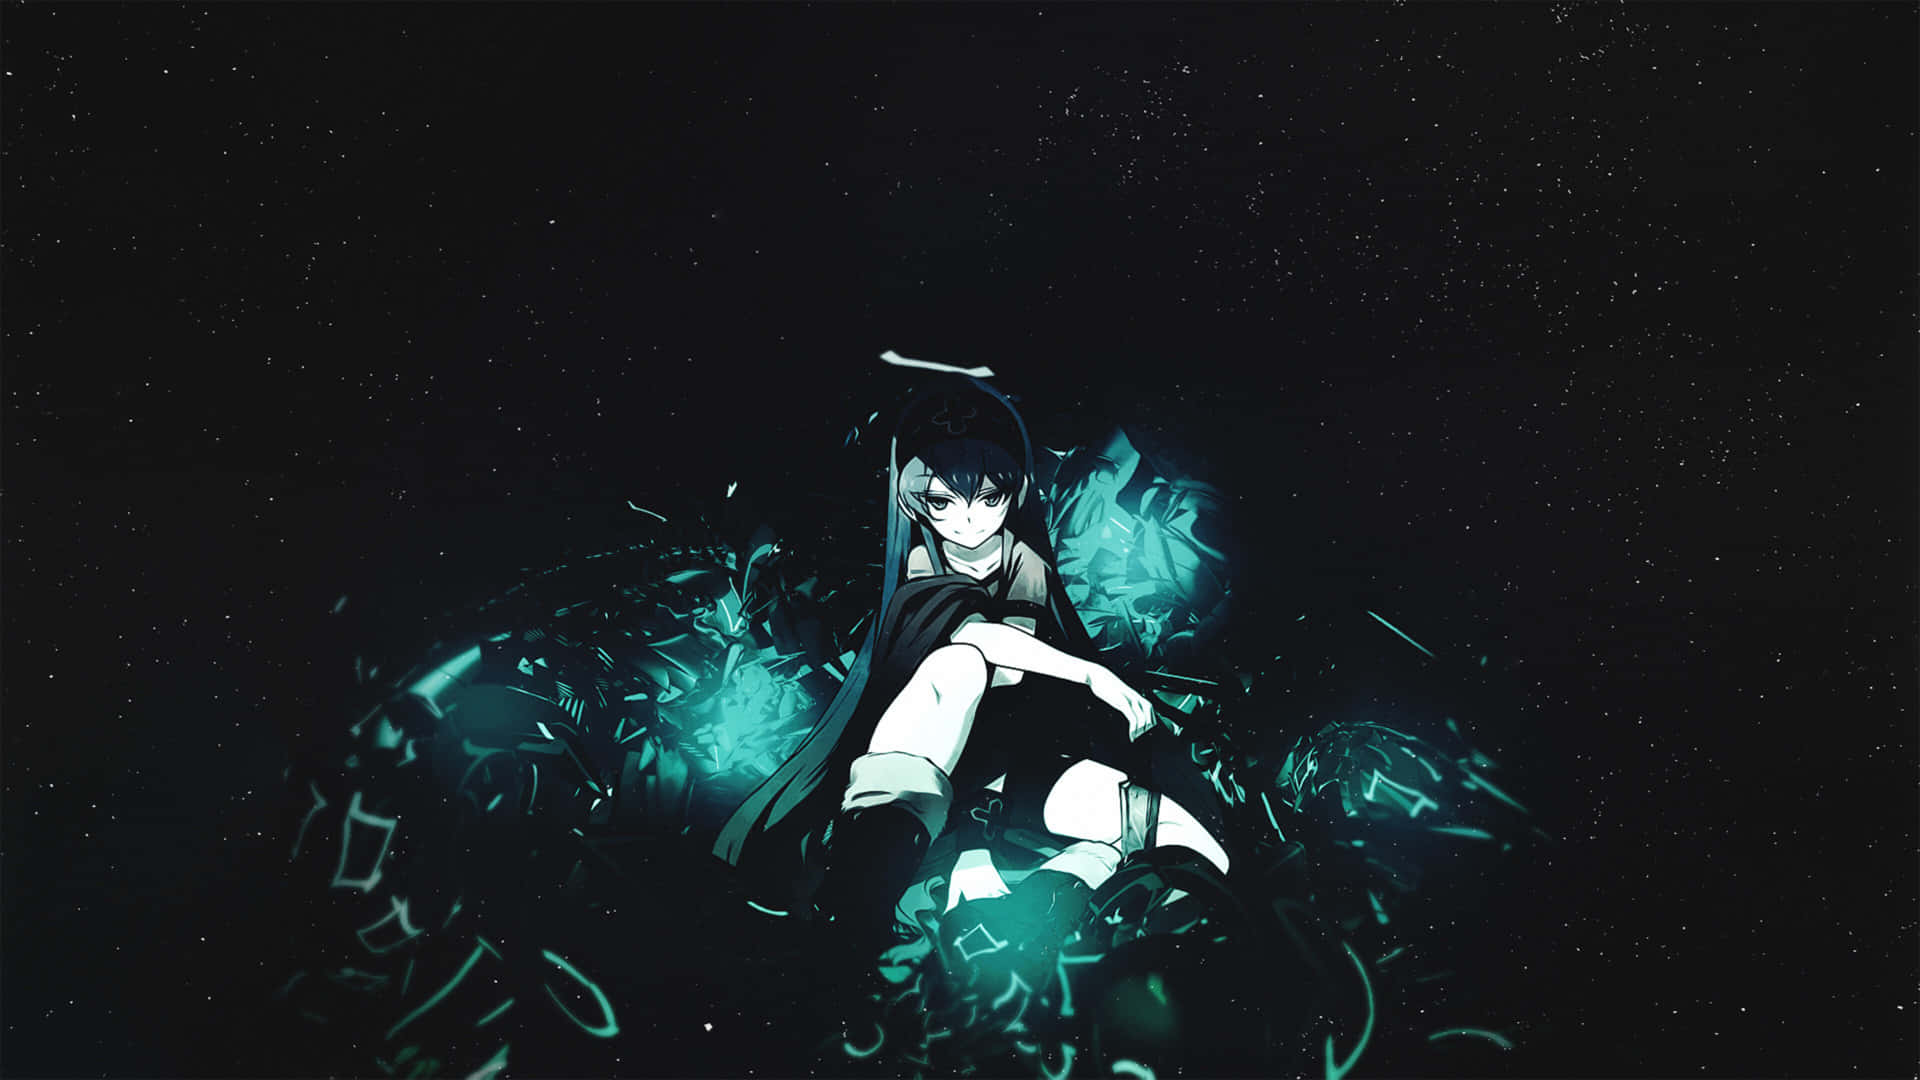 Akame Ga Kill 4K - Stunning image featuring Tatsumi and Akame in action Wallpaper